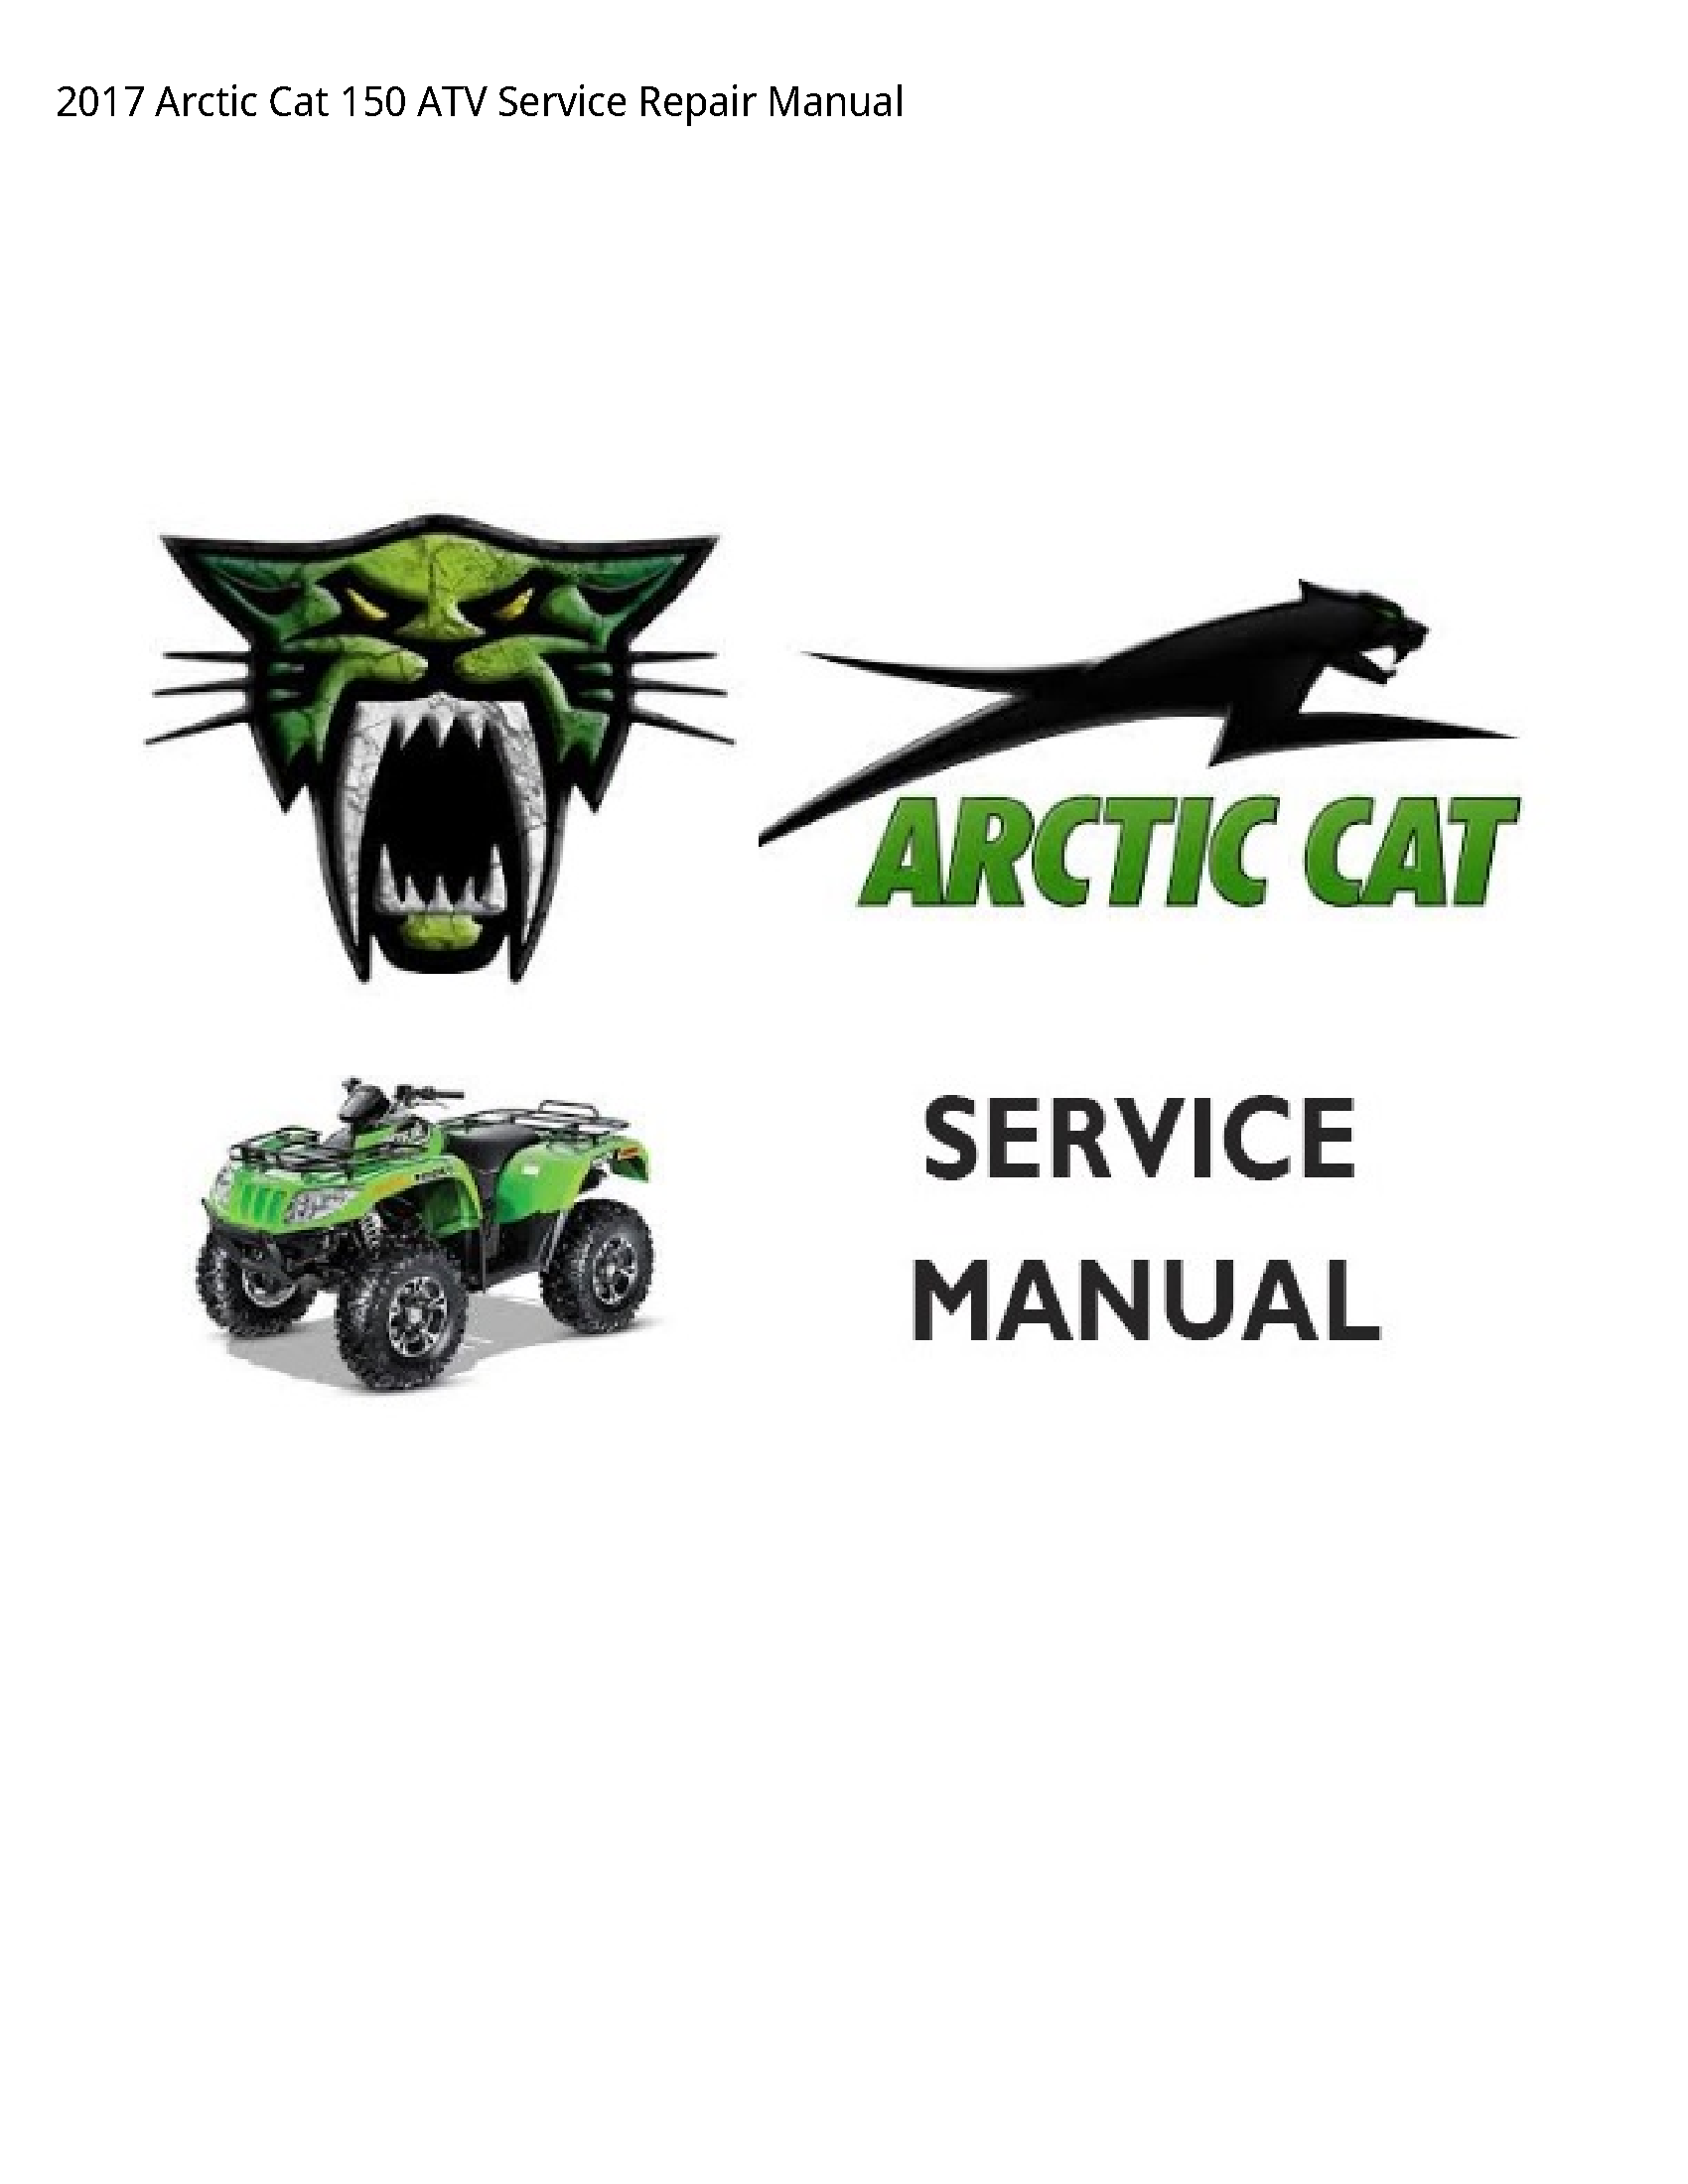 Arctic Cat 150 ATV manual